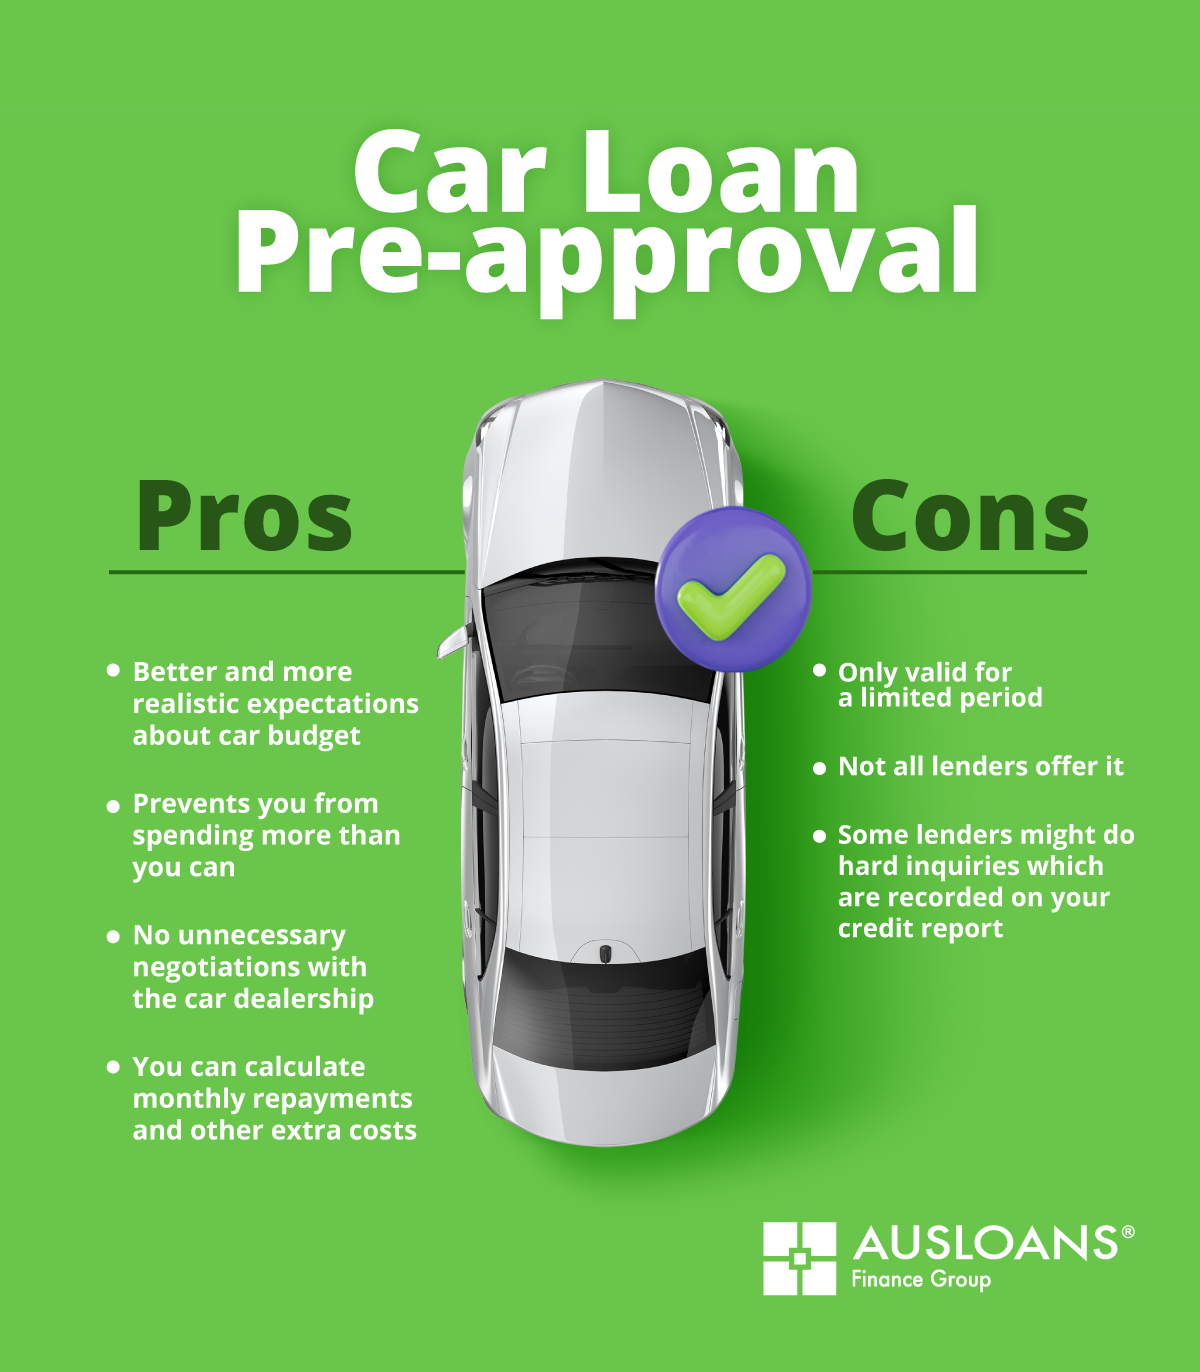 AUS_car-loan-pre-approval-11